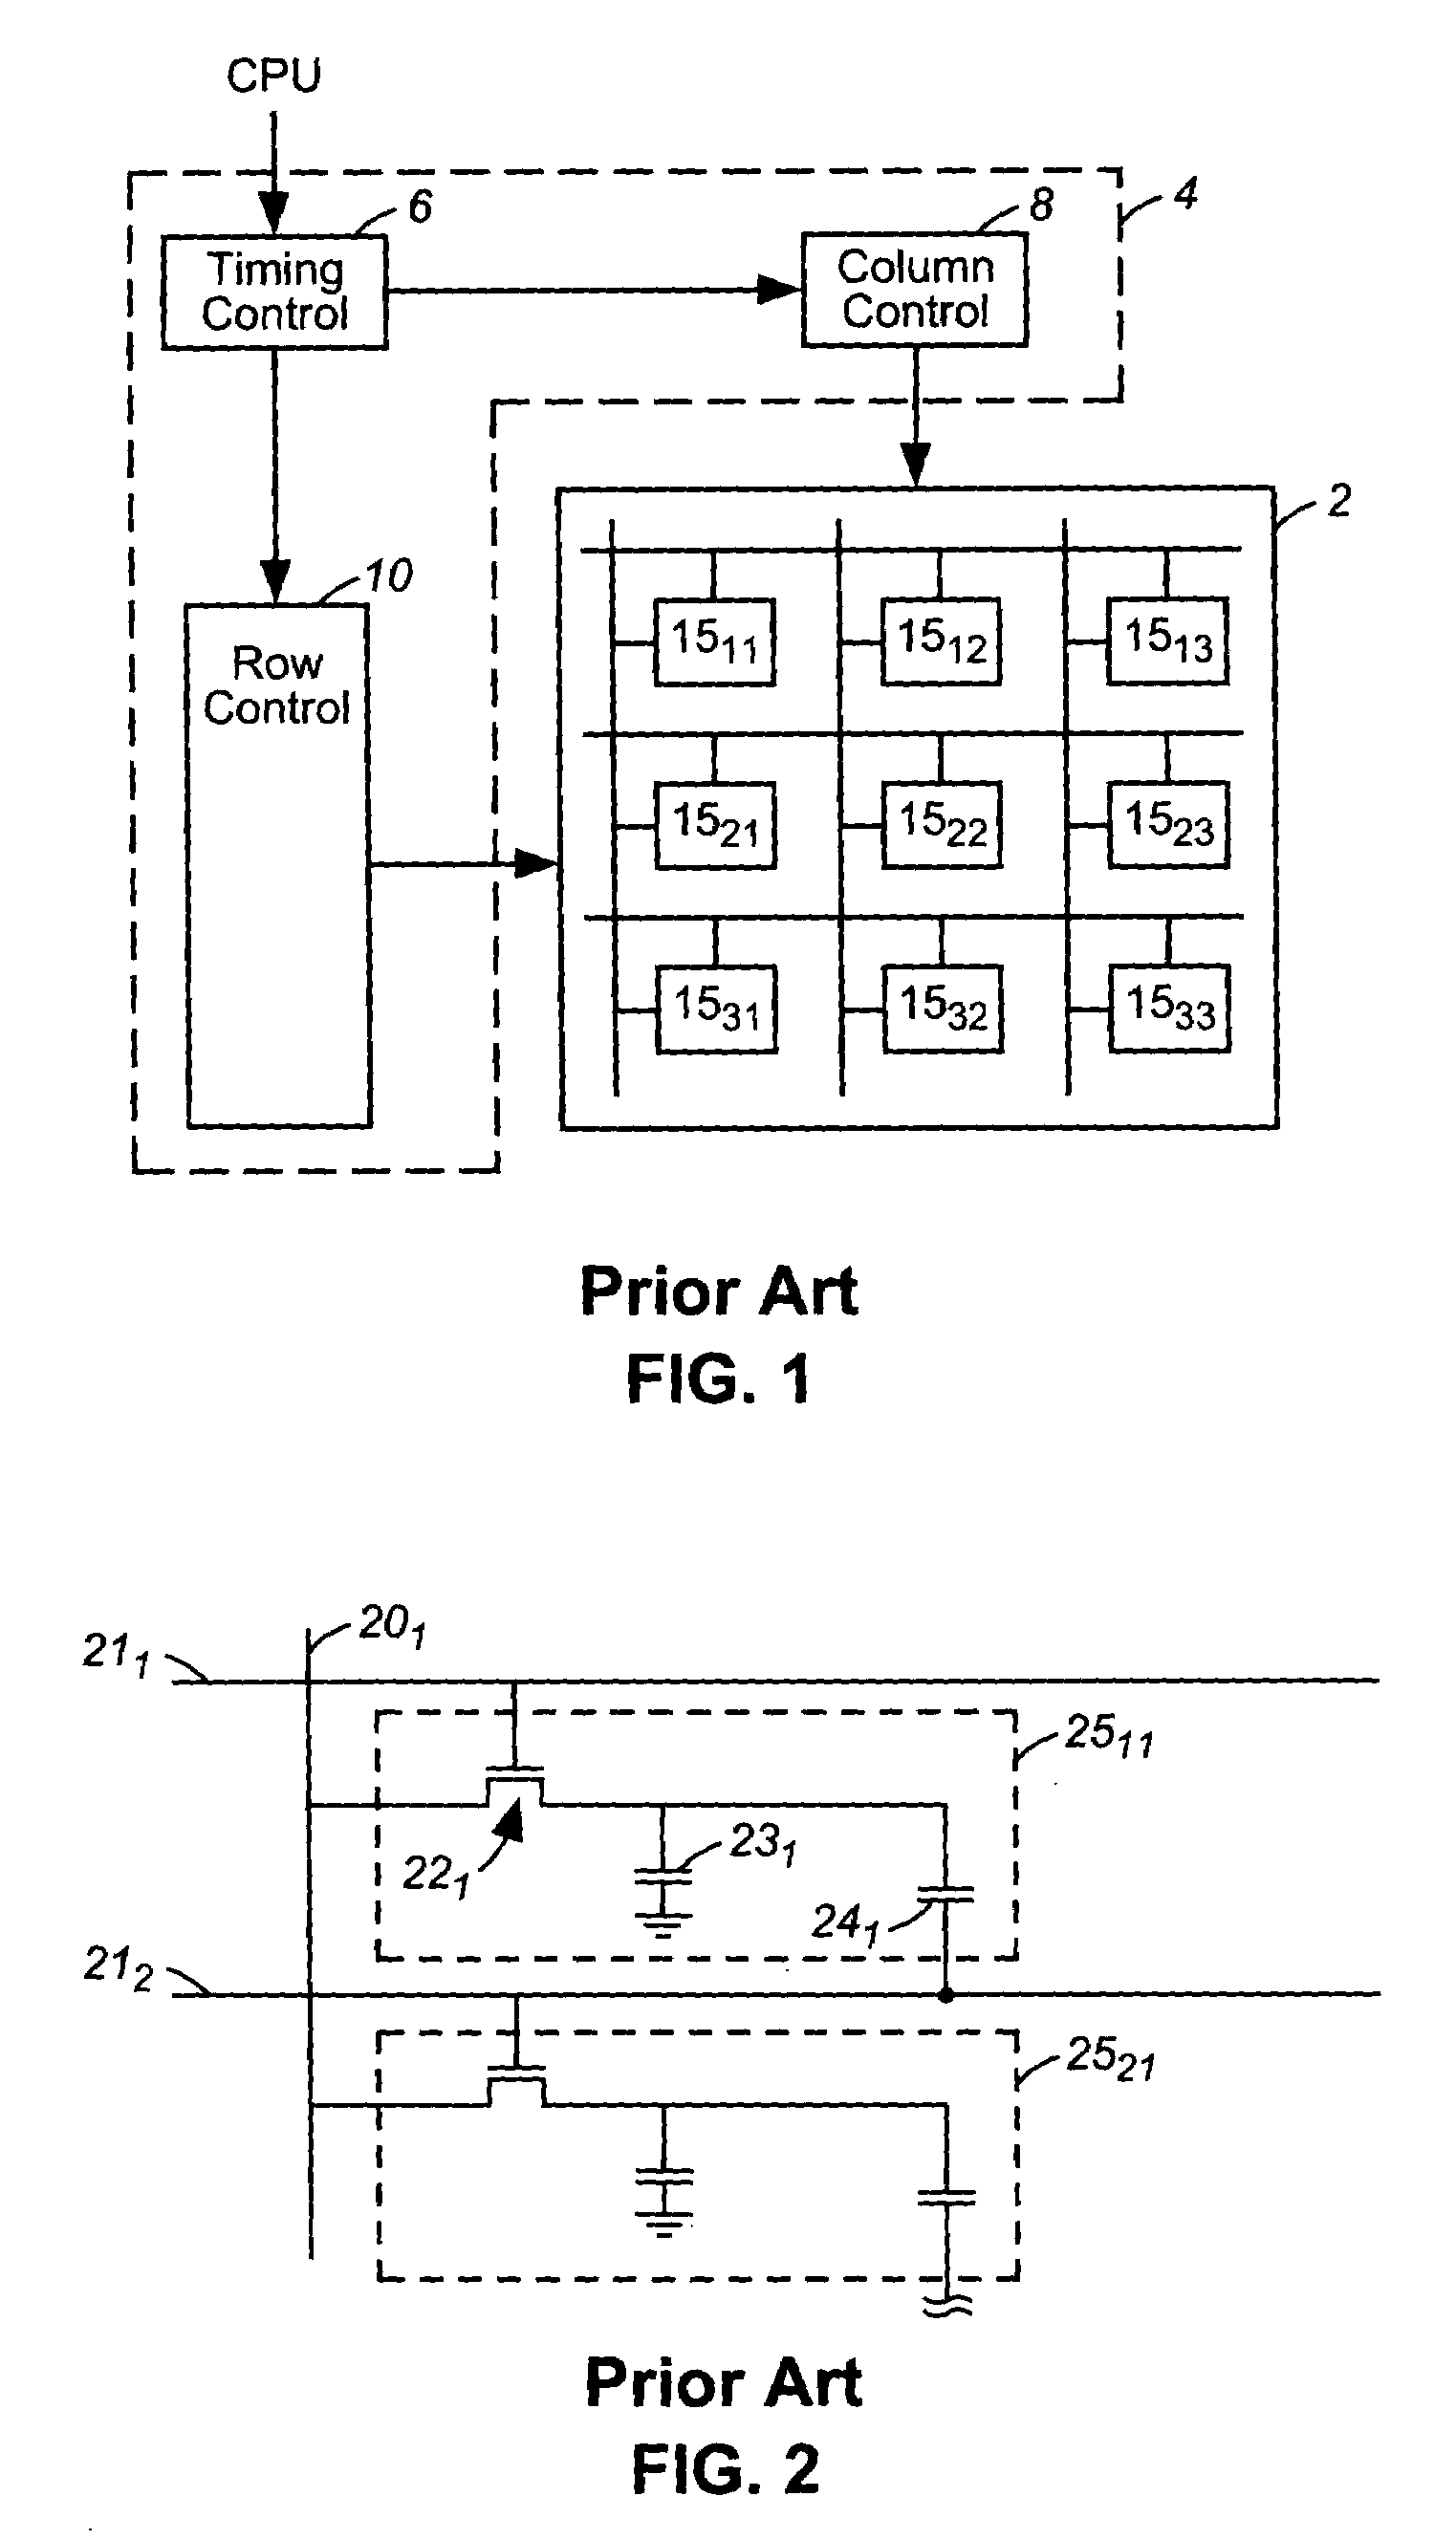 Display circuit with optical sensor